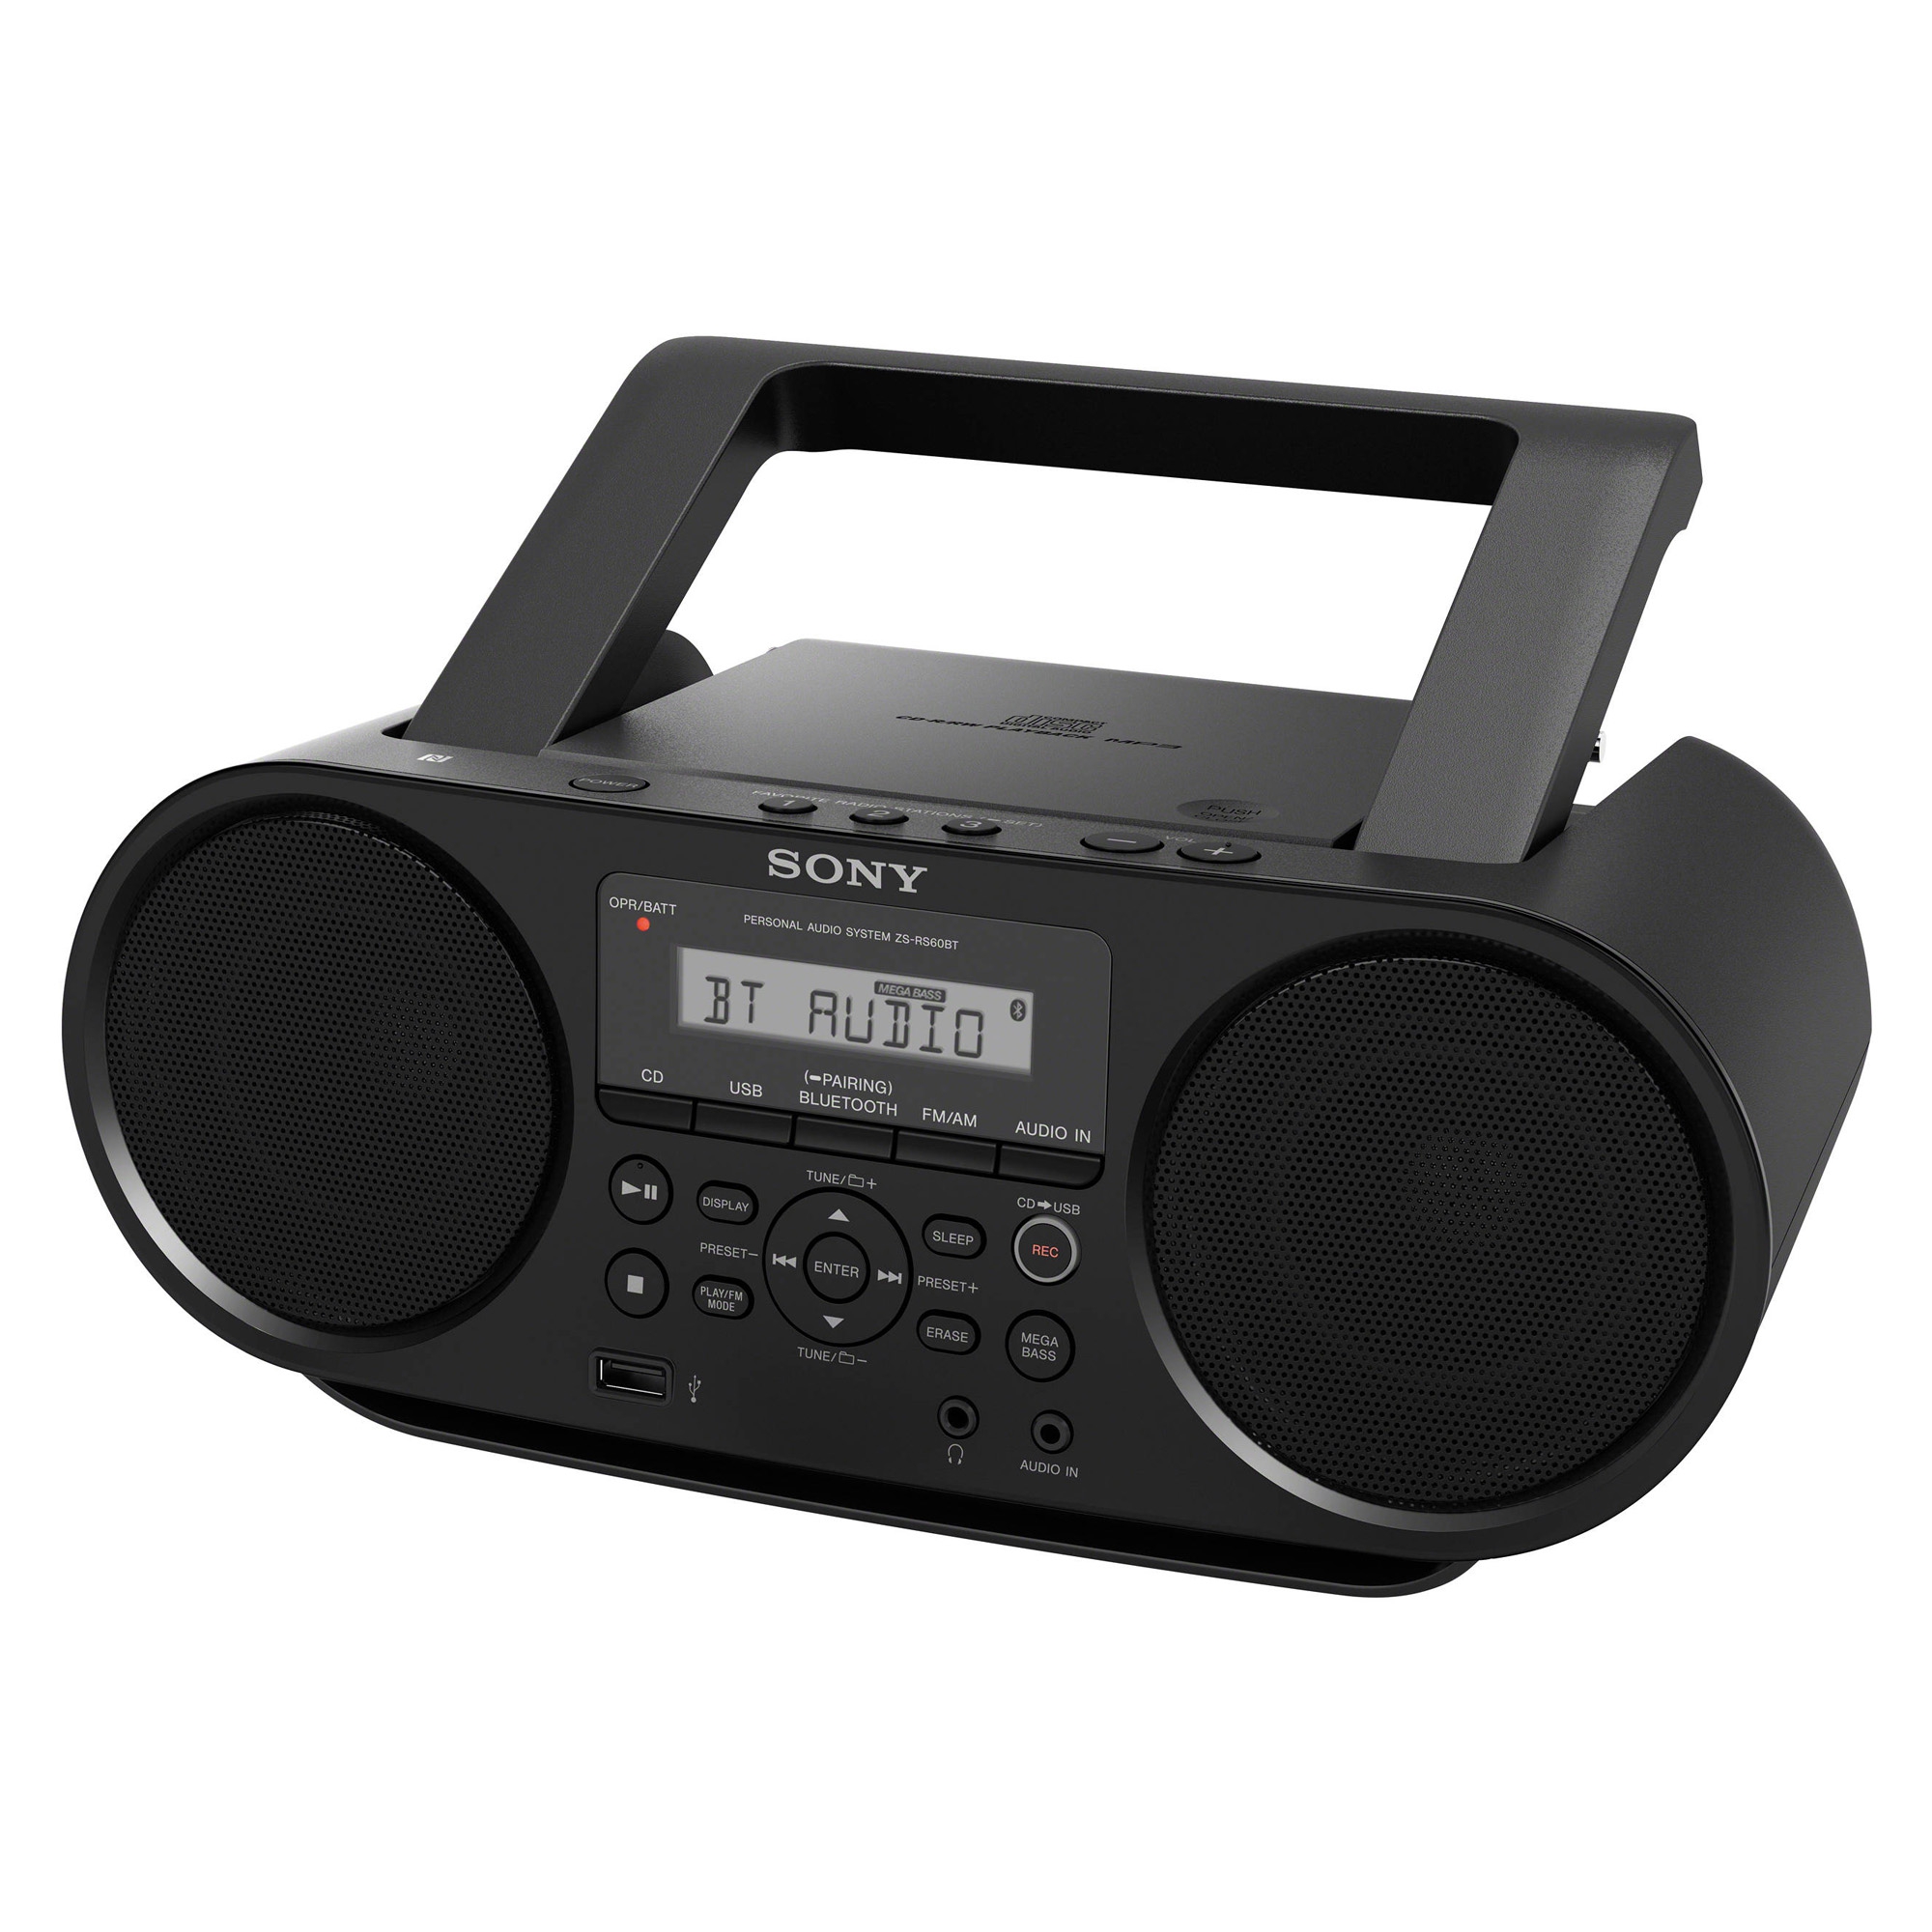 Sony Bluetooth CD/Radio Boombox, Black, ZS-RS60BT - image 1 of 2